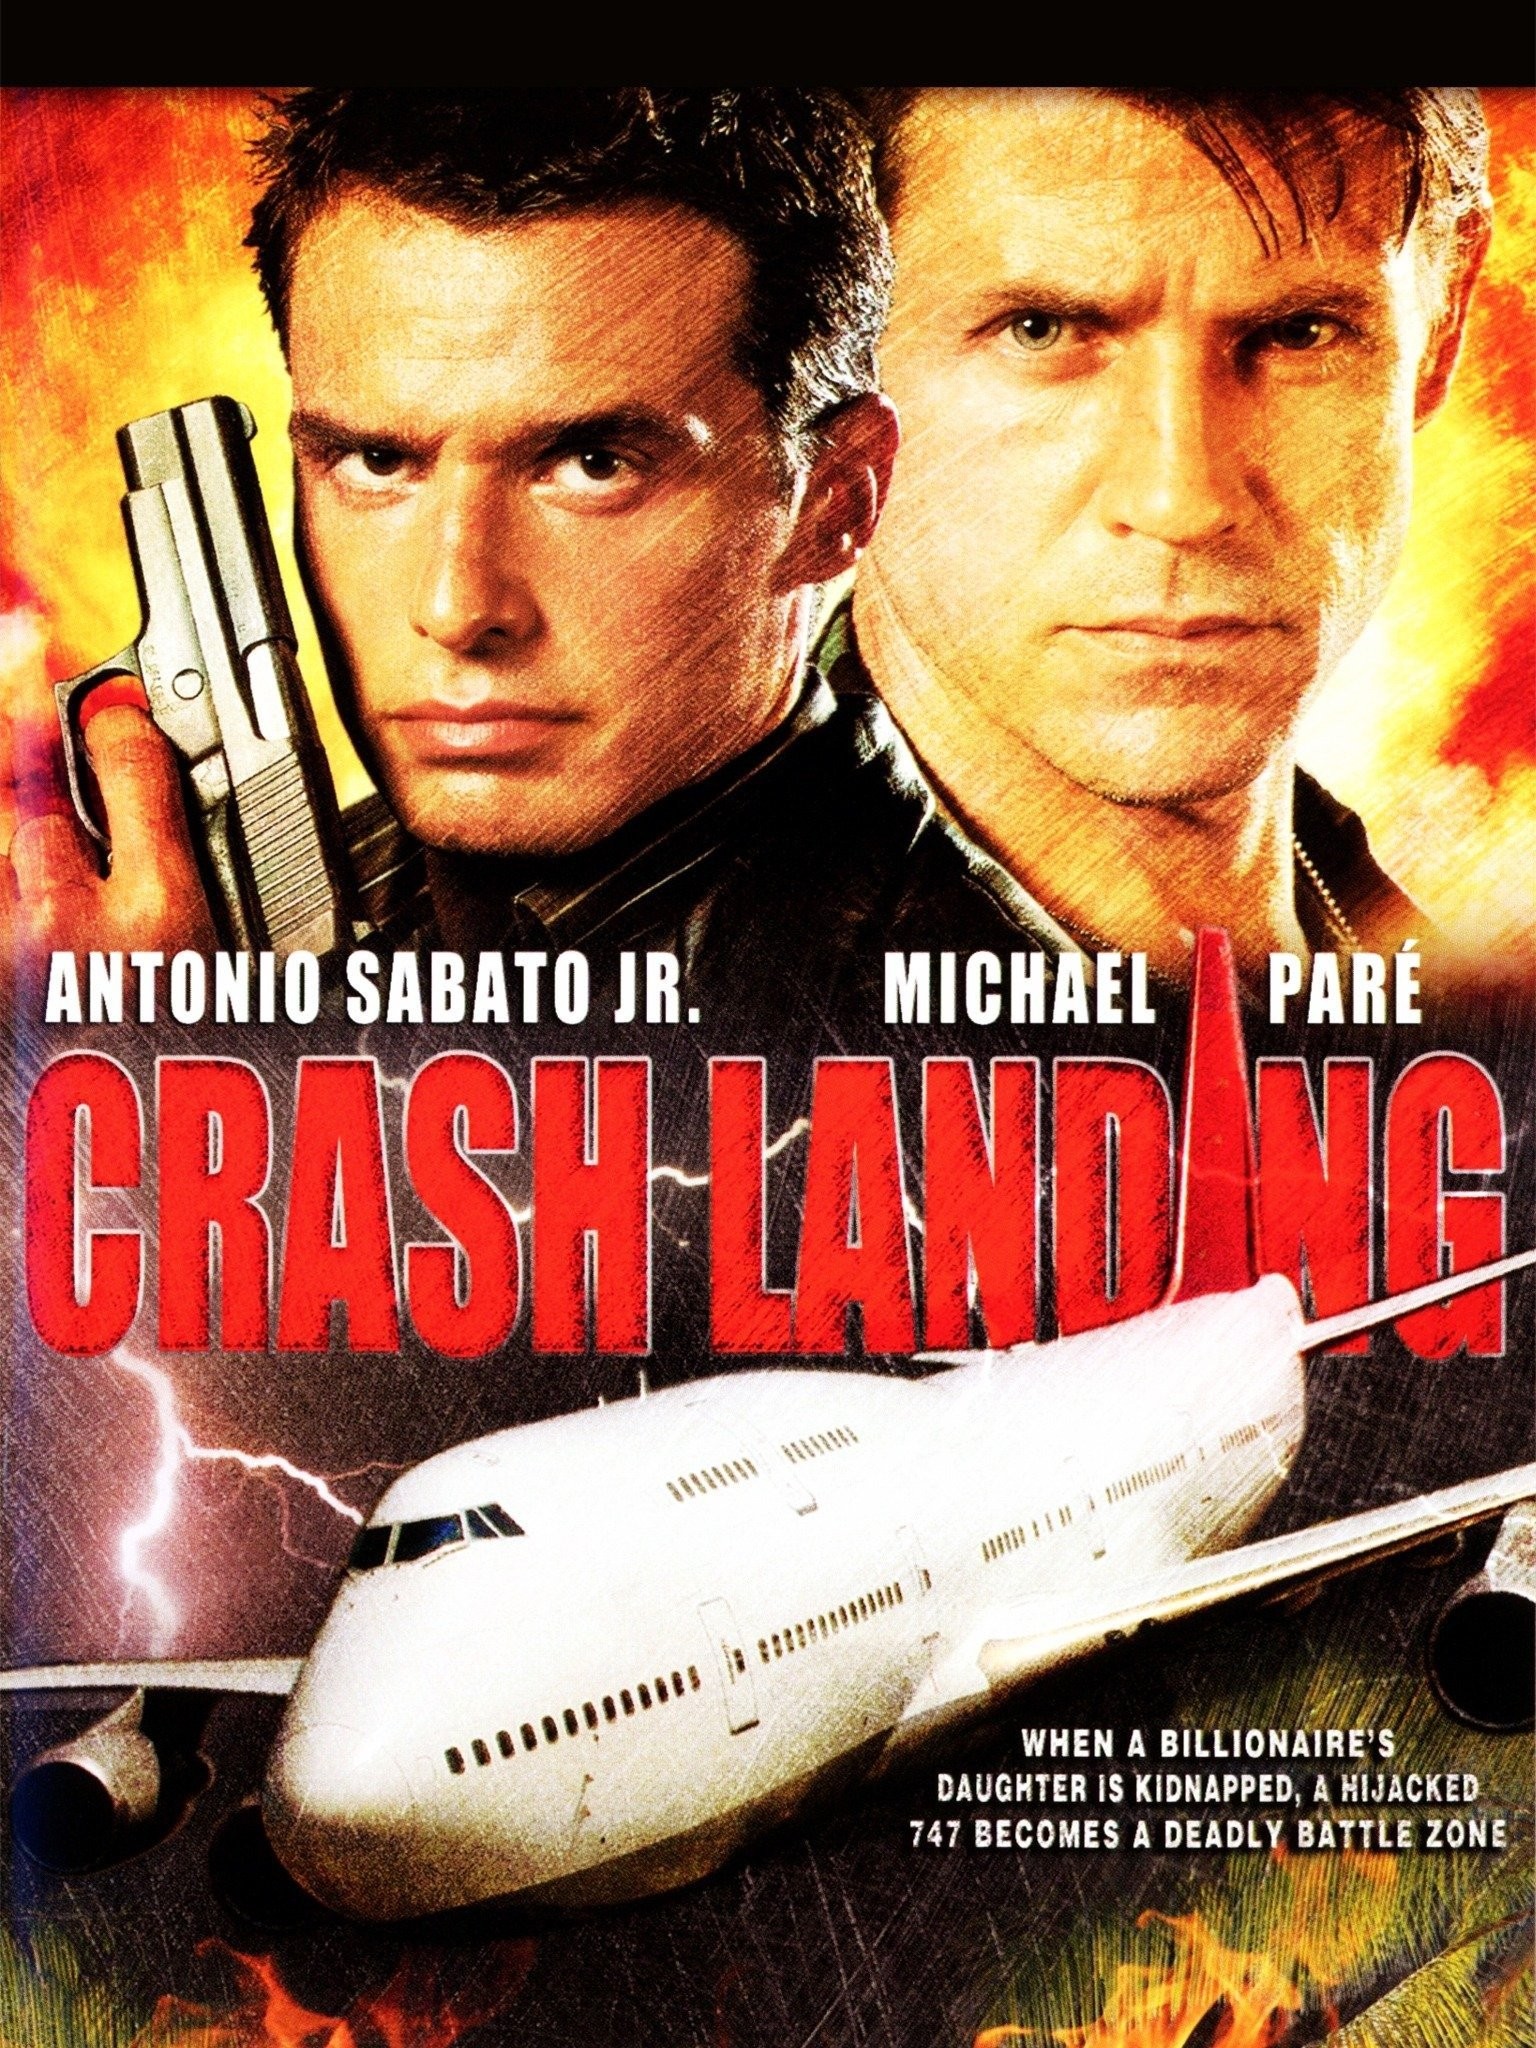 Crash Landing (2005) Movie